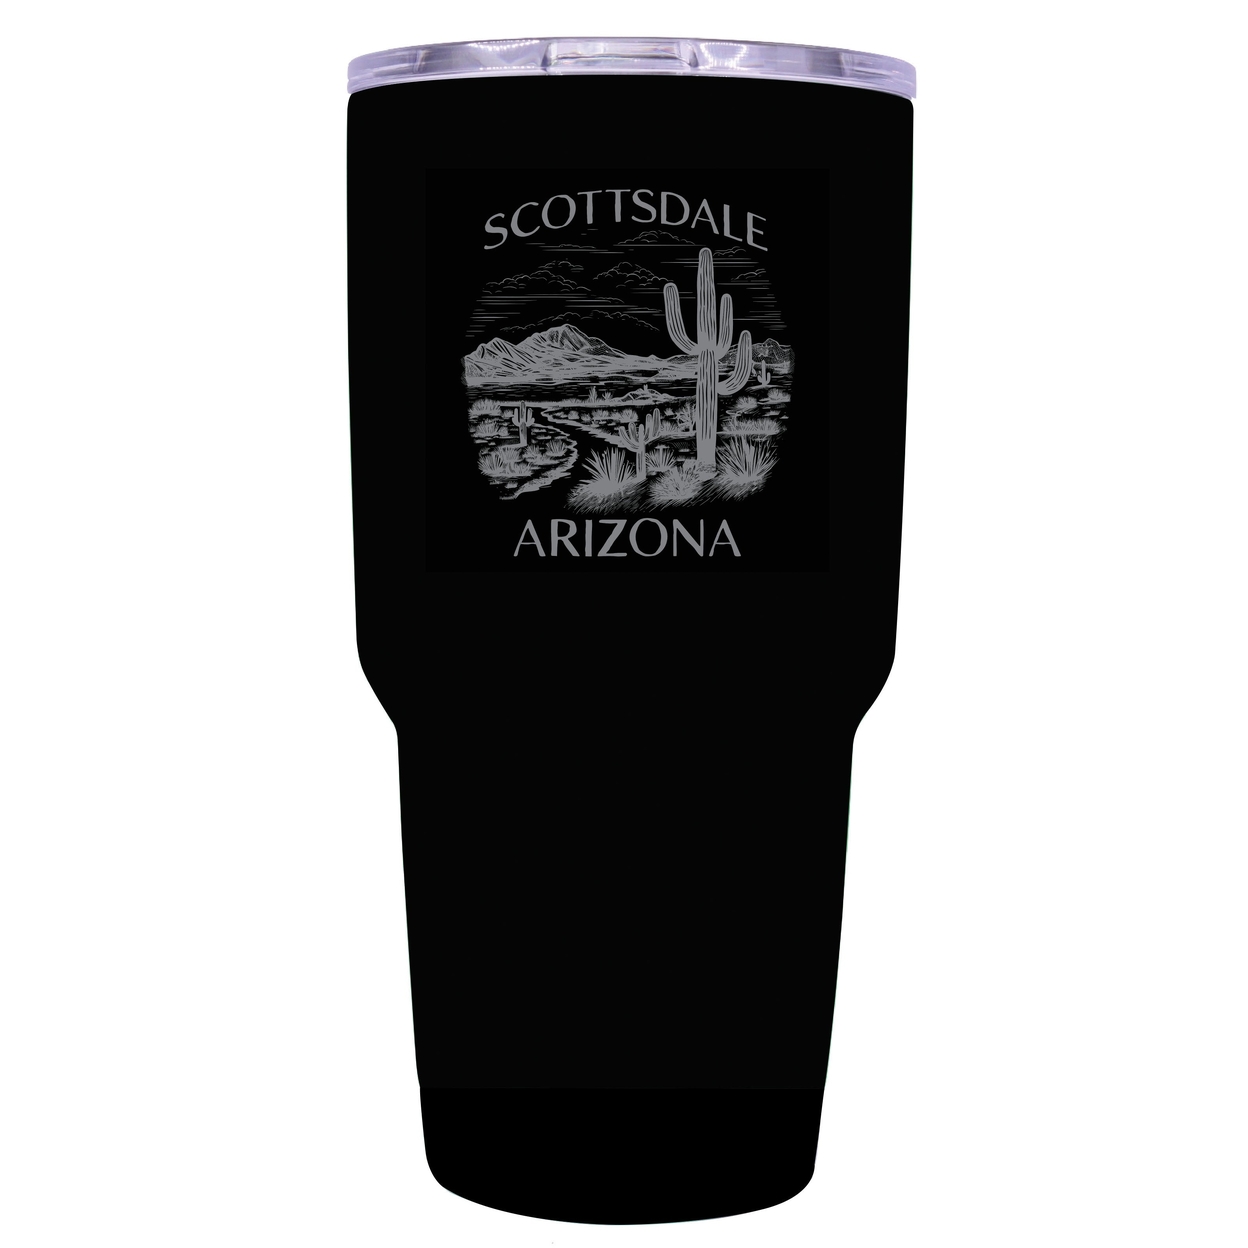 Scottsdale Arizona Souvenir 24 Oz Engraved Insulated Stainless Steel Tumbler - Black,,Single Unit